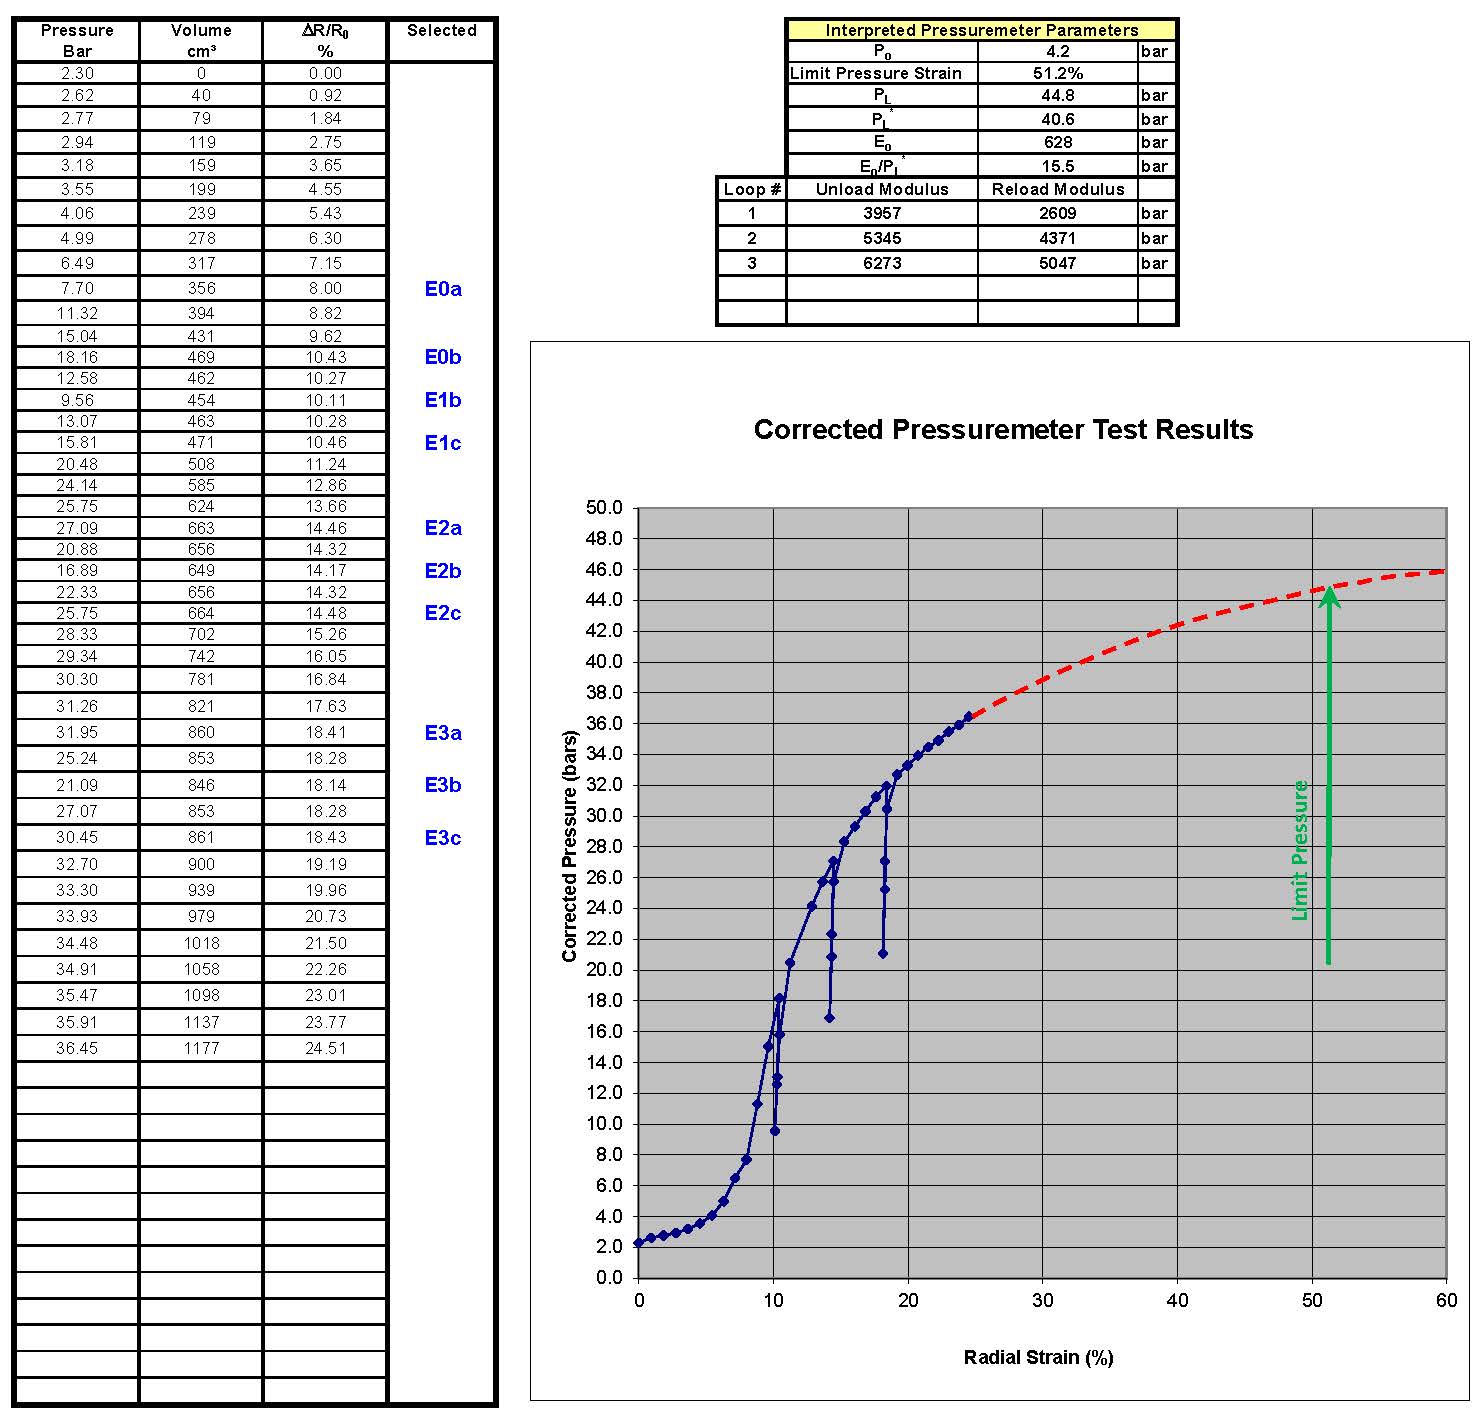 Typical pressuremeter test results